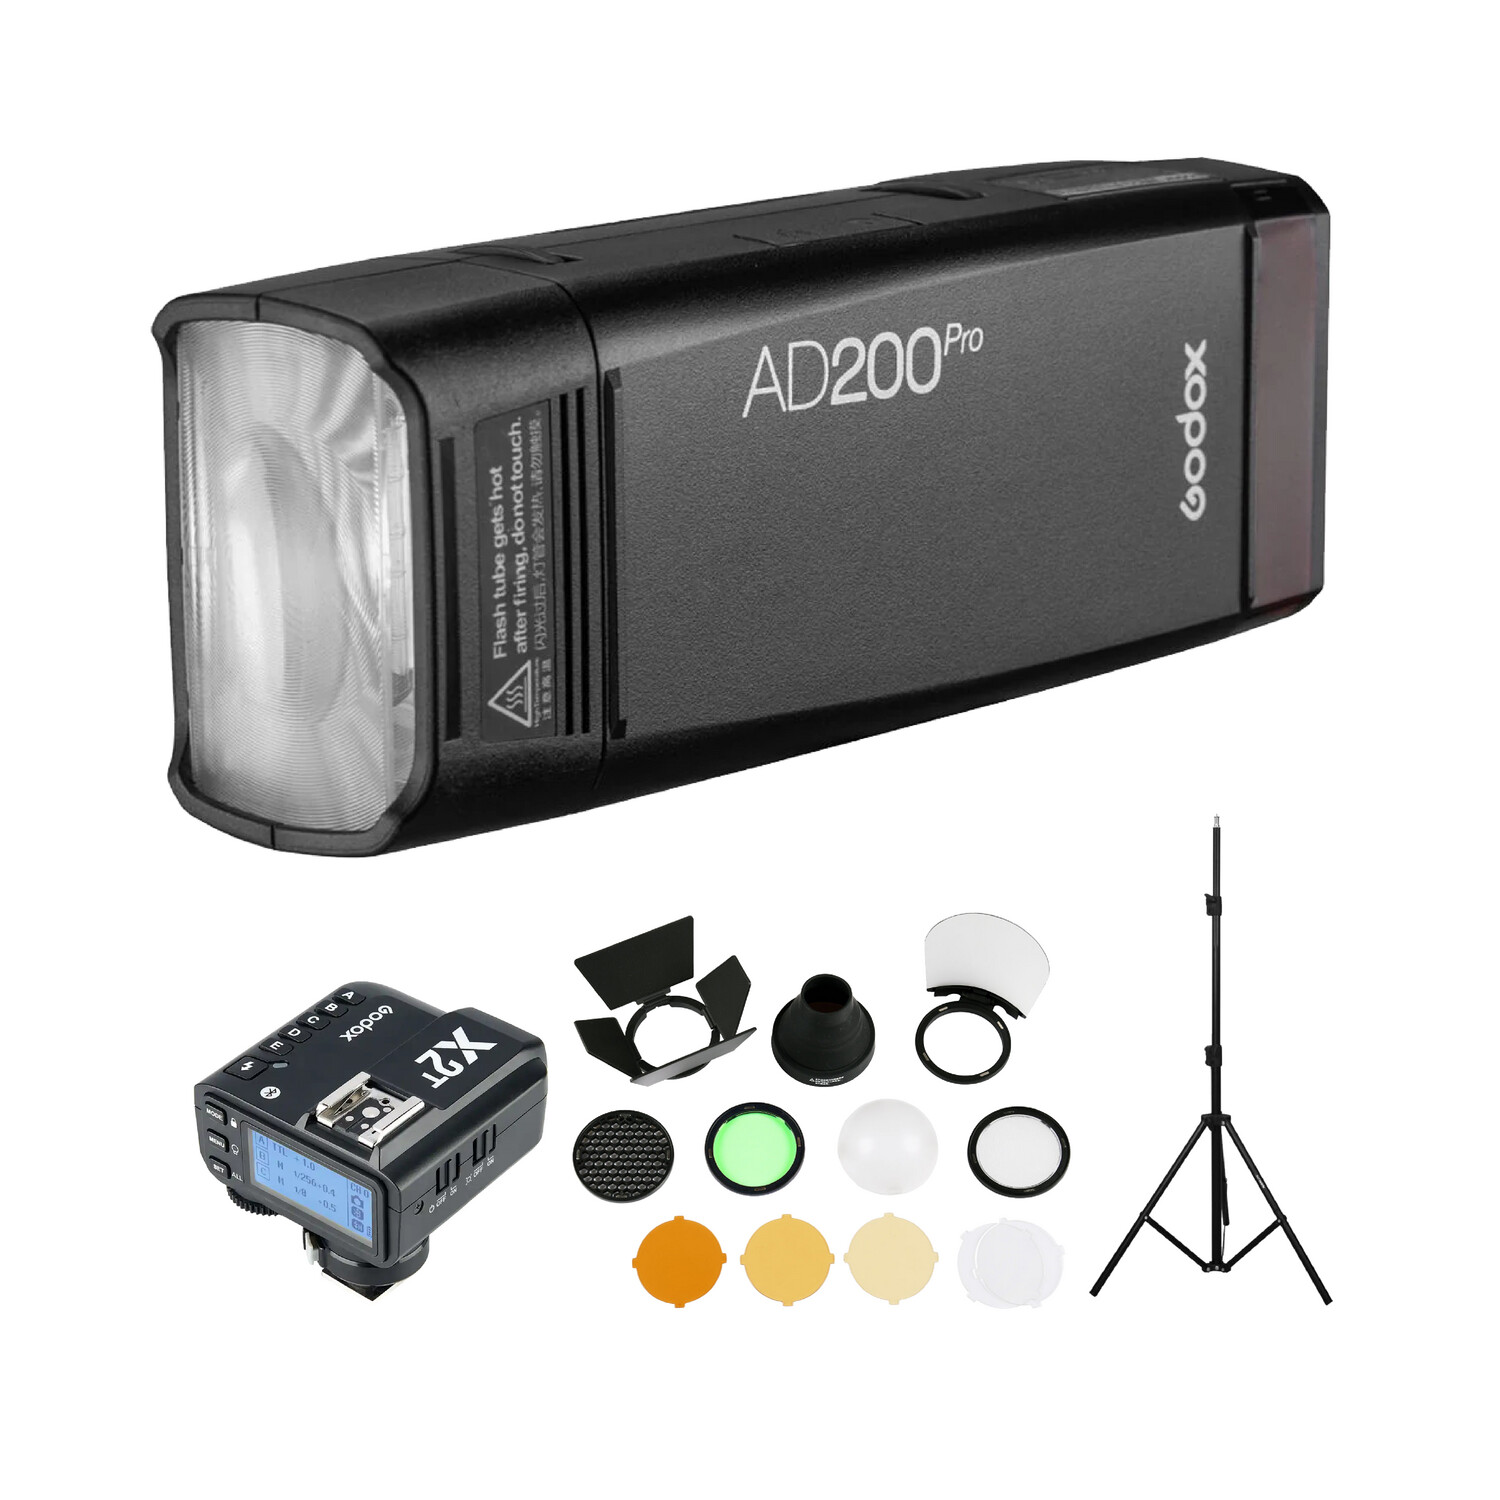 Godox AD200 Pro Pocket Flash Bundle with Godox X2T Trigger + AK-R1 Accessories Kit and Nanlite Stand